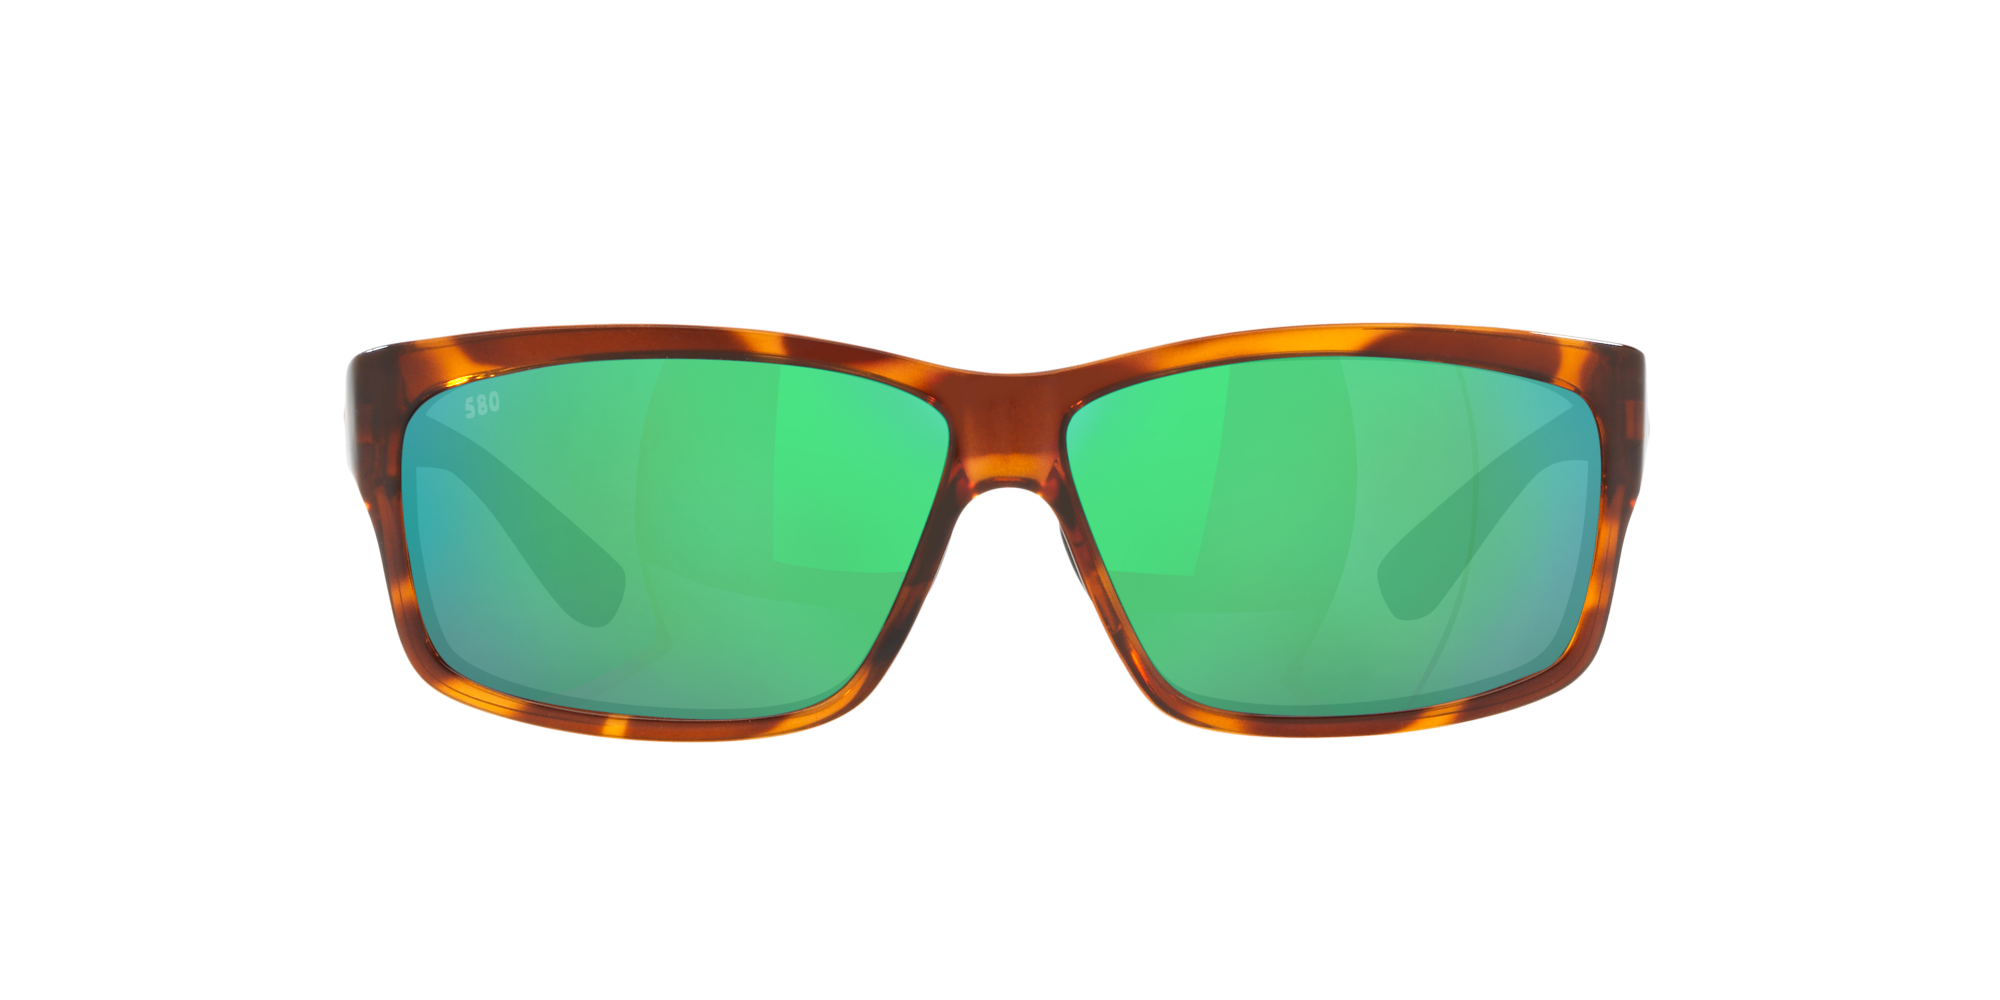 COSTA DEL MAR Hammerhead 580 POLARIZED Sunglasses Tortoise/Green 580G NEW